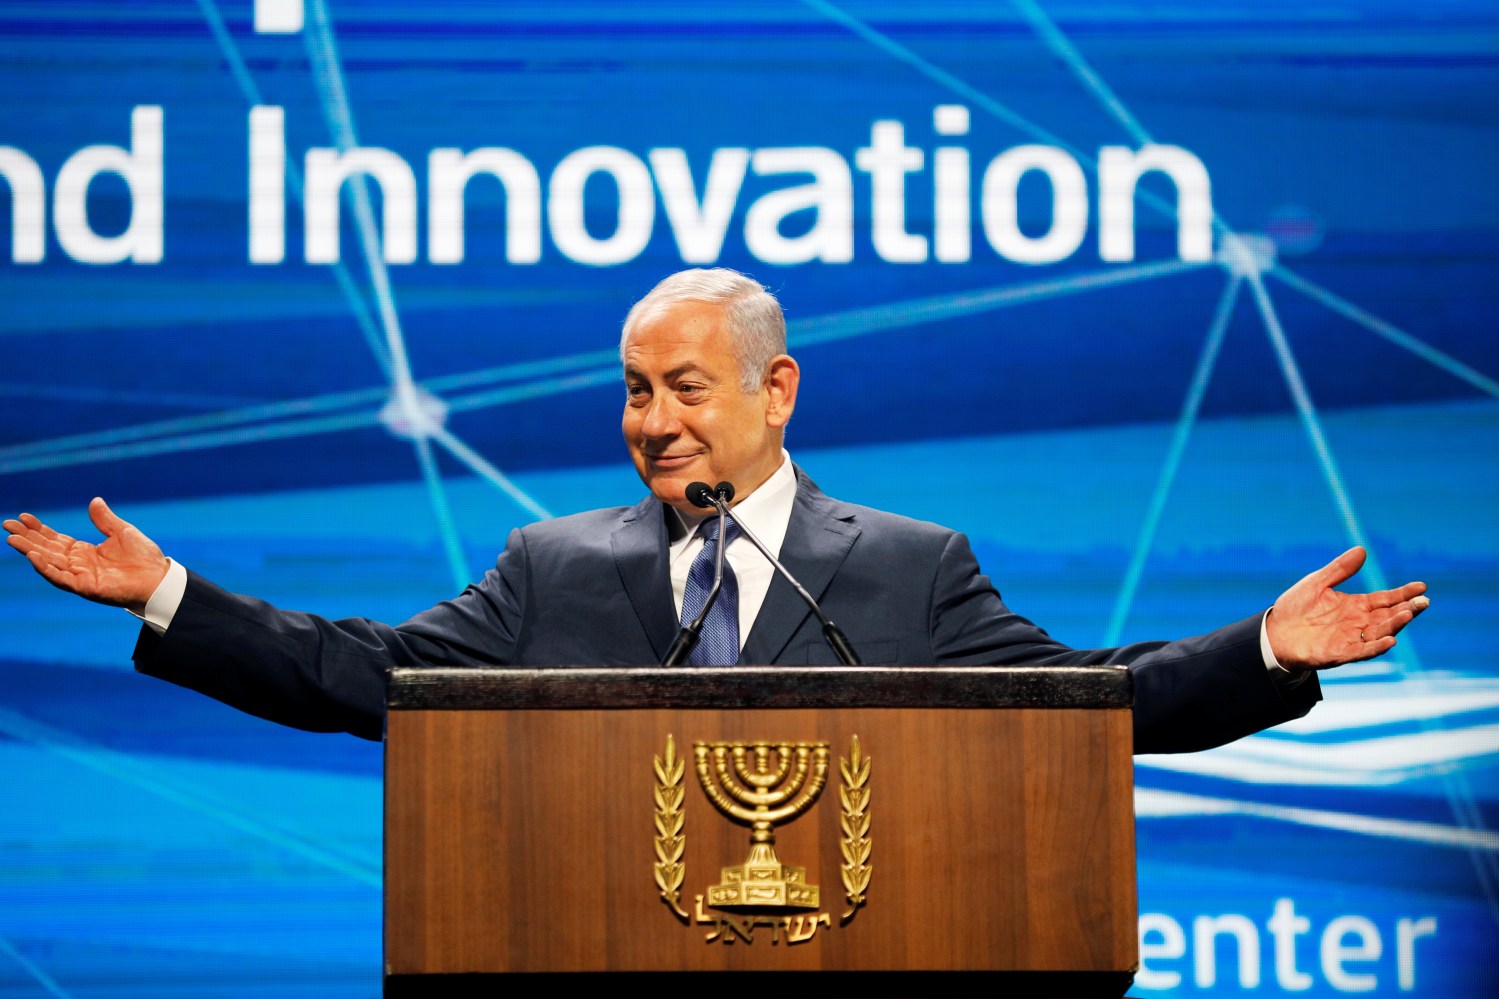 Israel's Prime Minister Benjamin Netanyahu speaks at The Prime Minister's Israeli Innovation Summit in Tel Aviv, Israel October 25, 2018. REUTERS/Amir Cohen - RC126FB37470